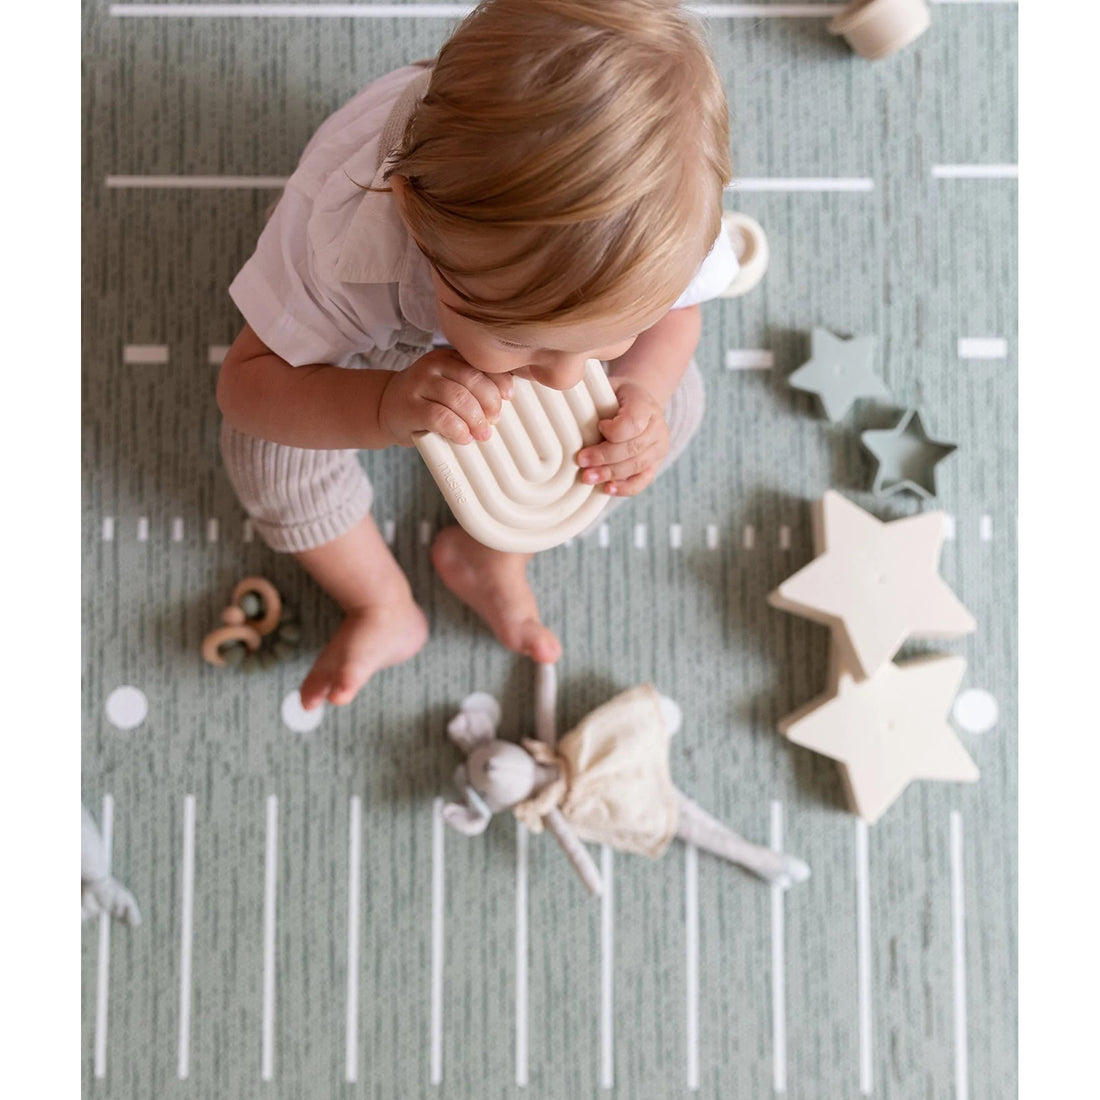 toddlekind-prettier-playmat-berber-moss-120x180cm-6-tiles-&-12-edging-borders-todk-338679- (16)